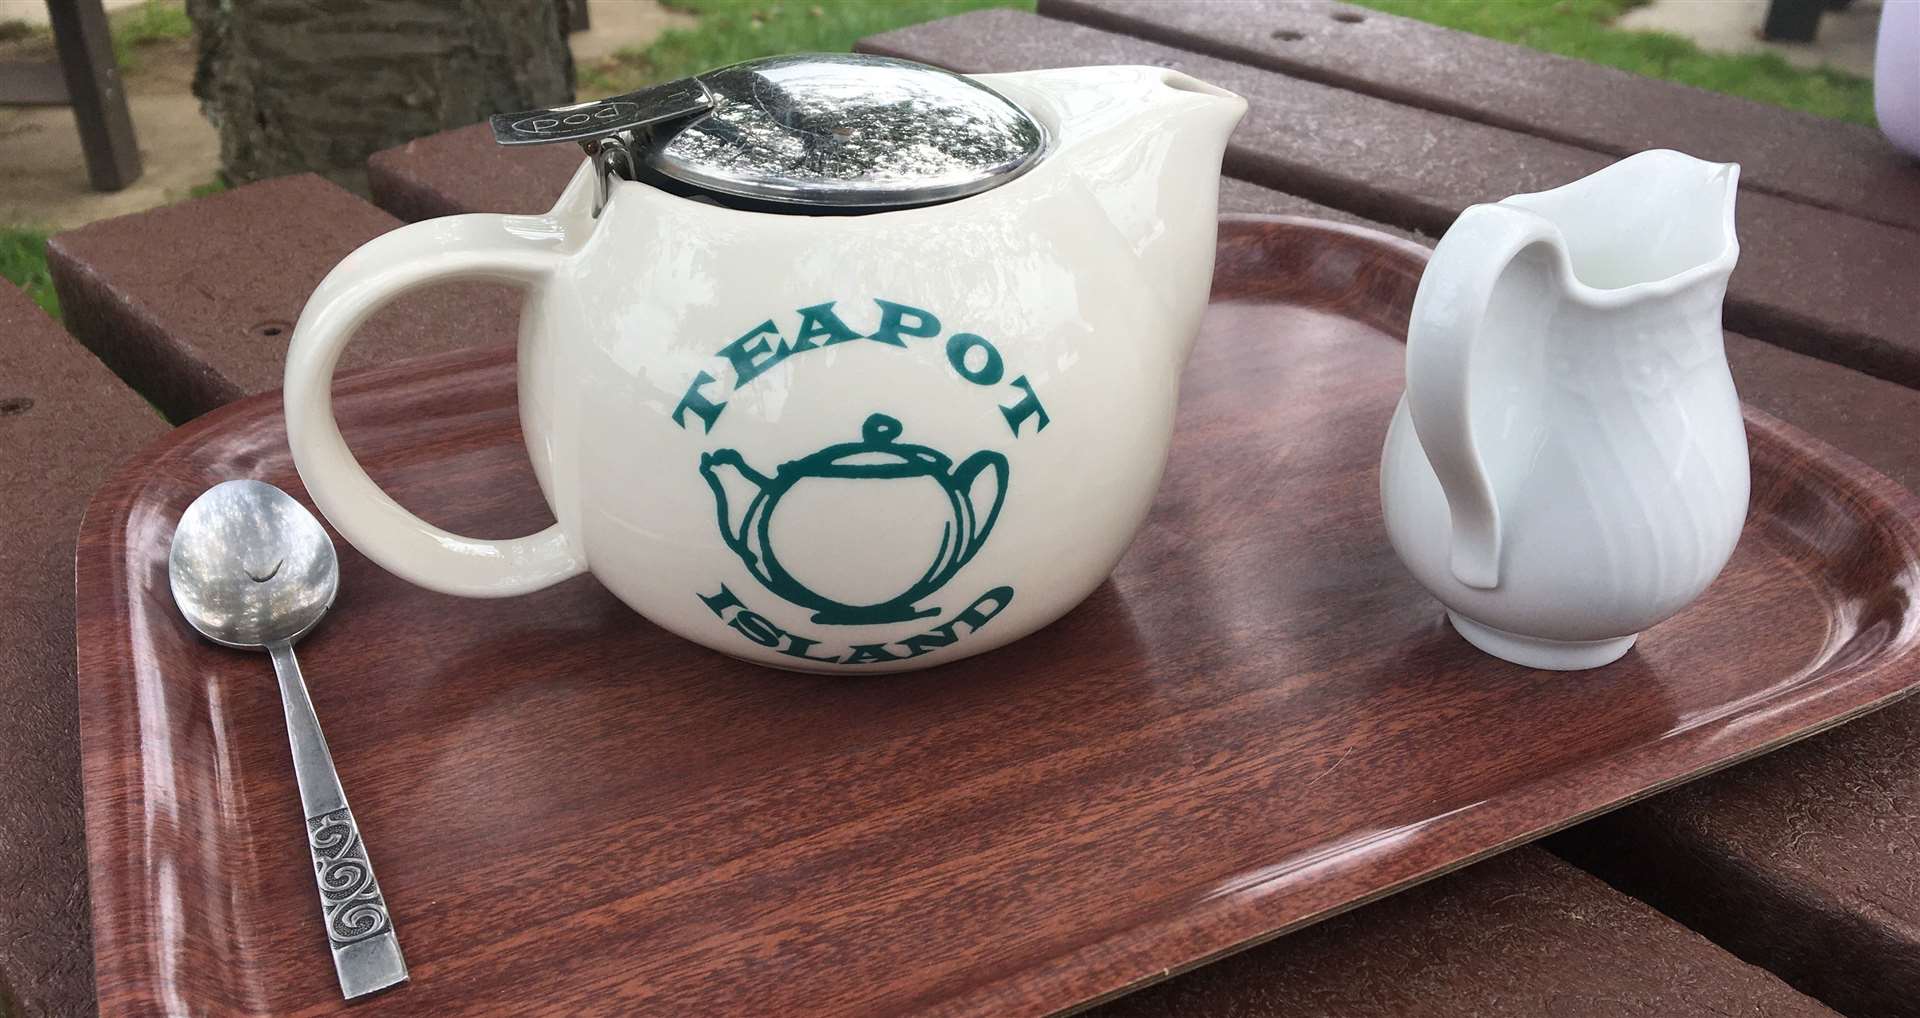 Tea Pot Island's own... teapot